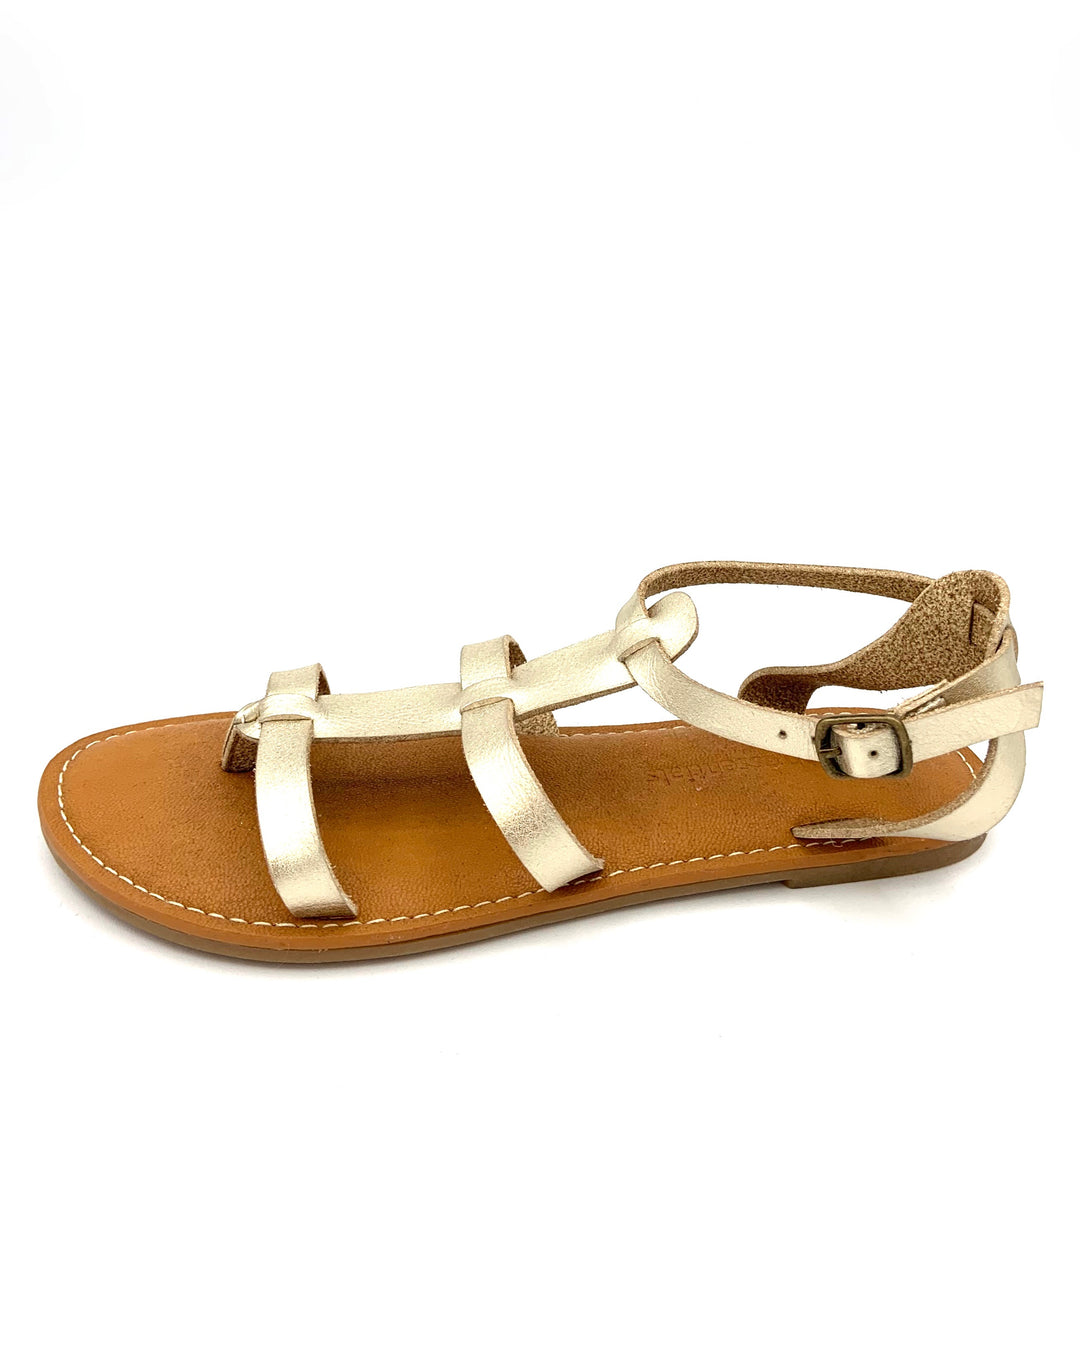 Gold Gladiator Sandals - Size 6